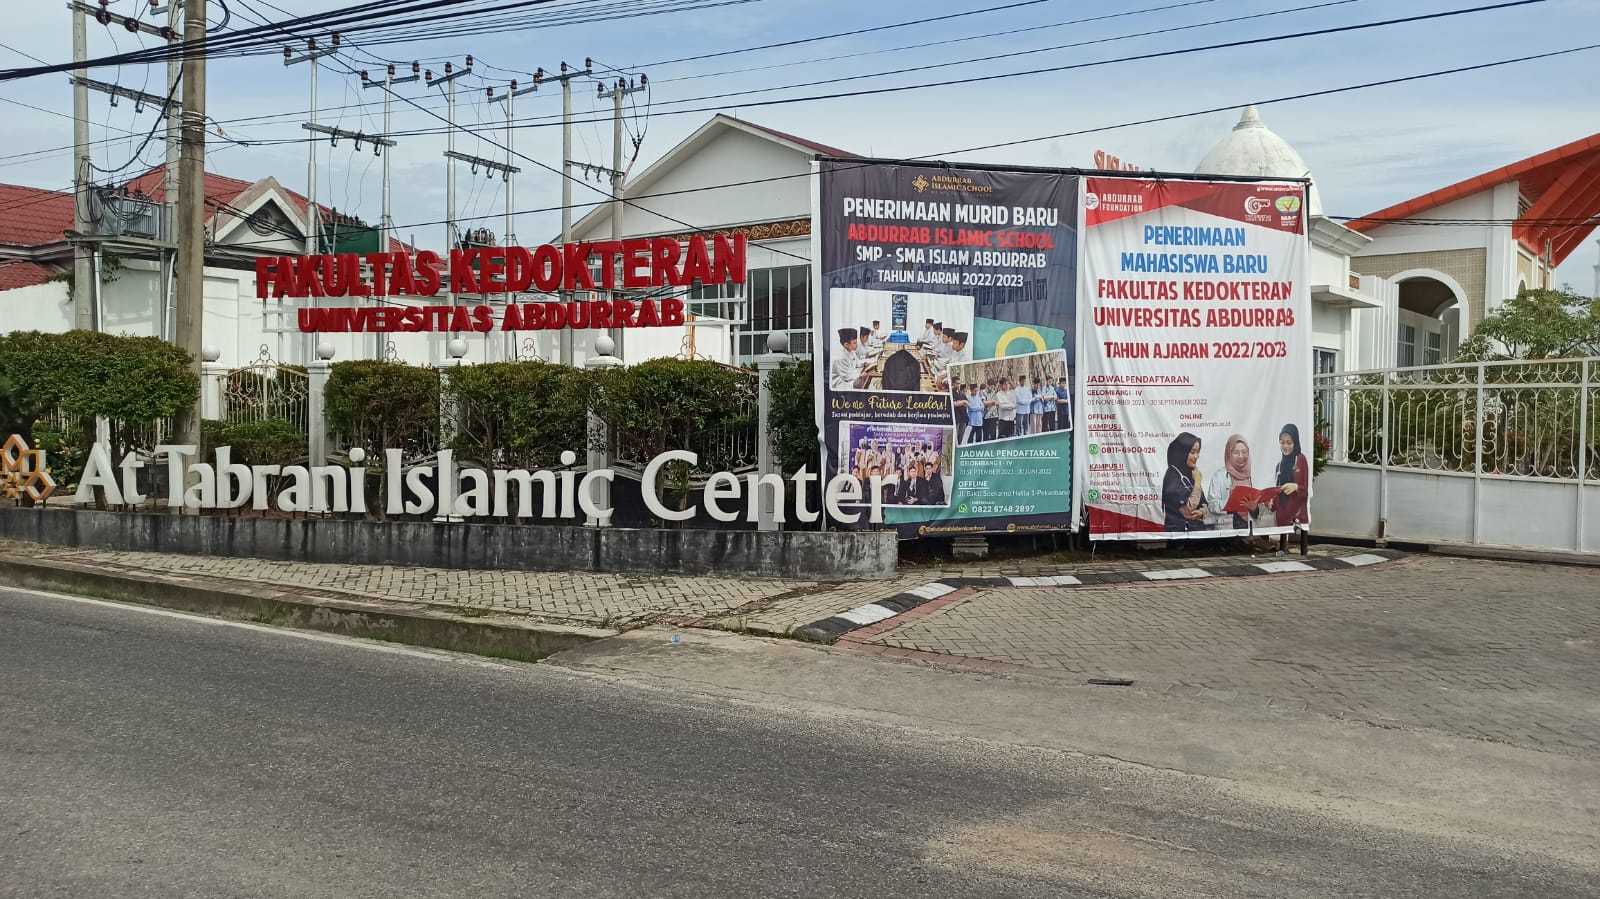 Satgas Covid-19 Kota Pekanbaru Lockdown Abdurrab Islamic School